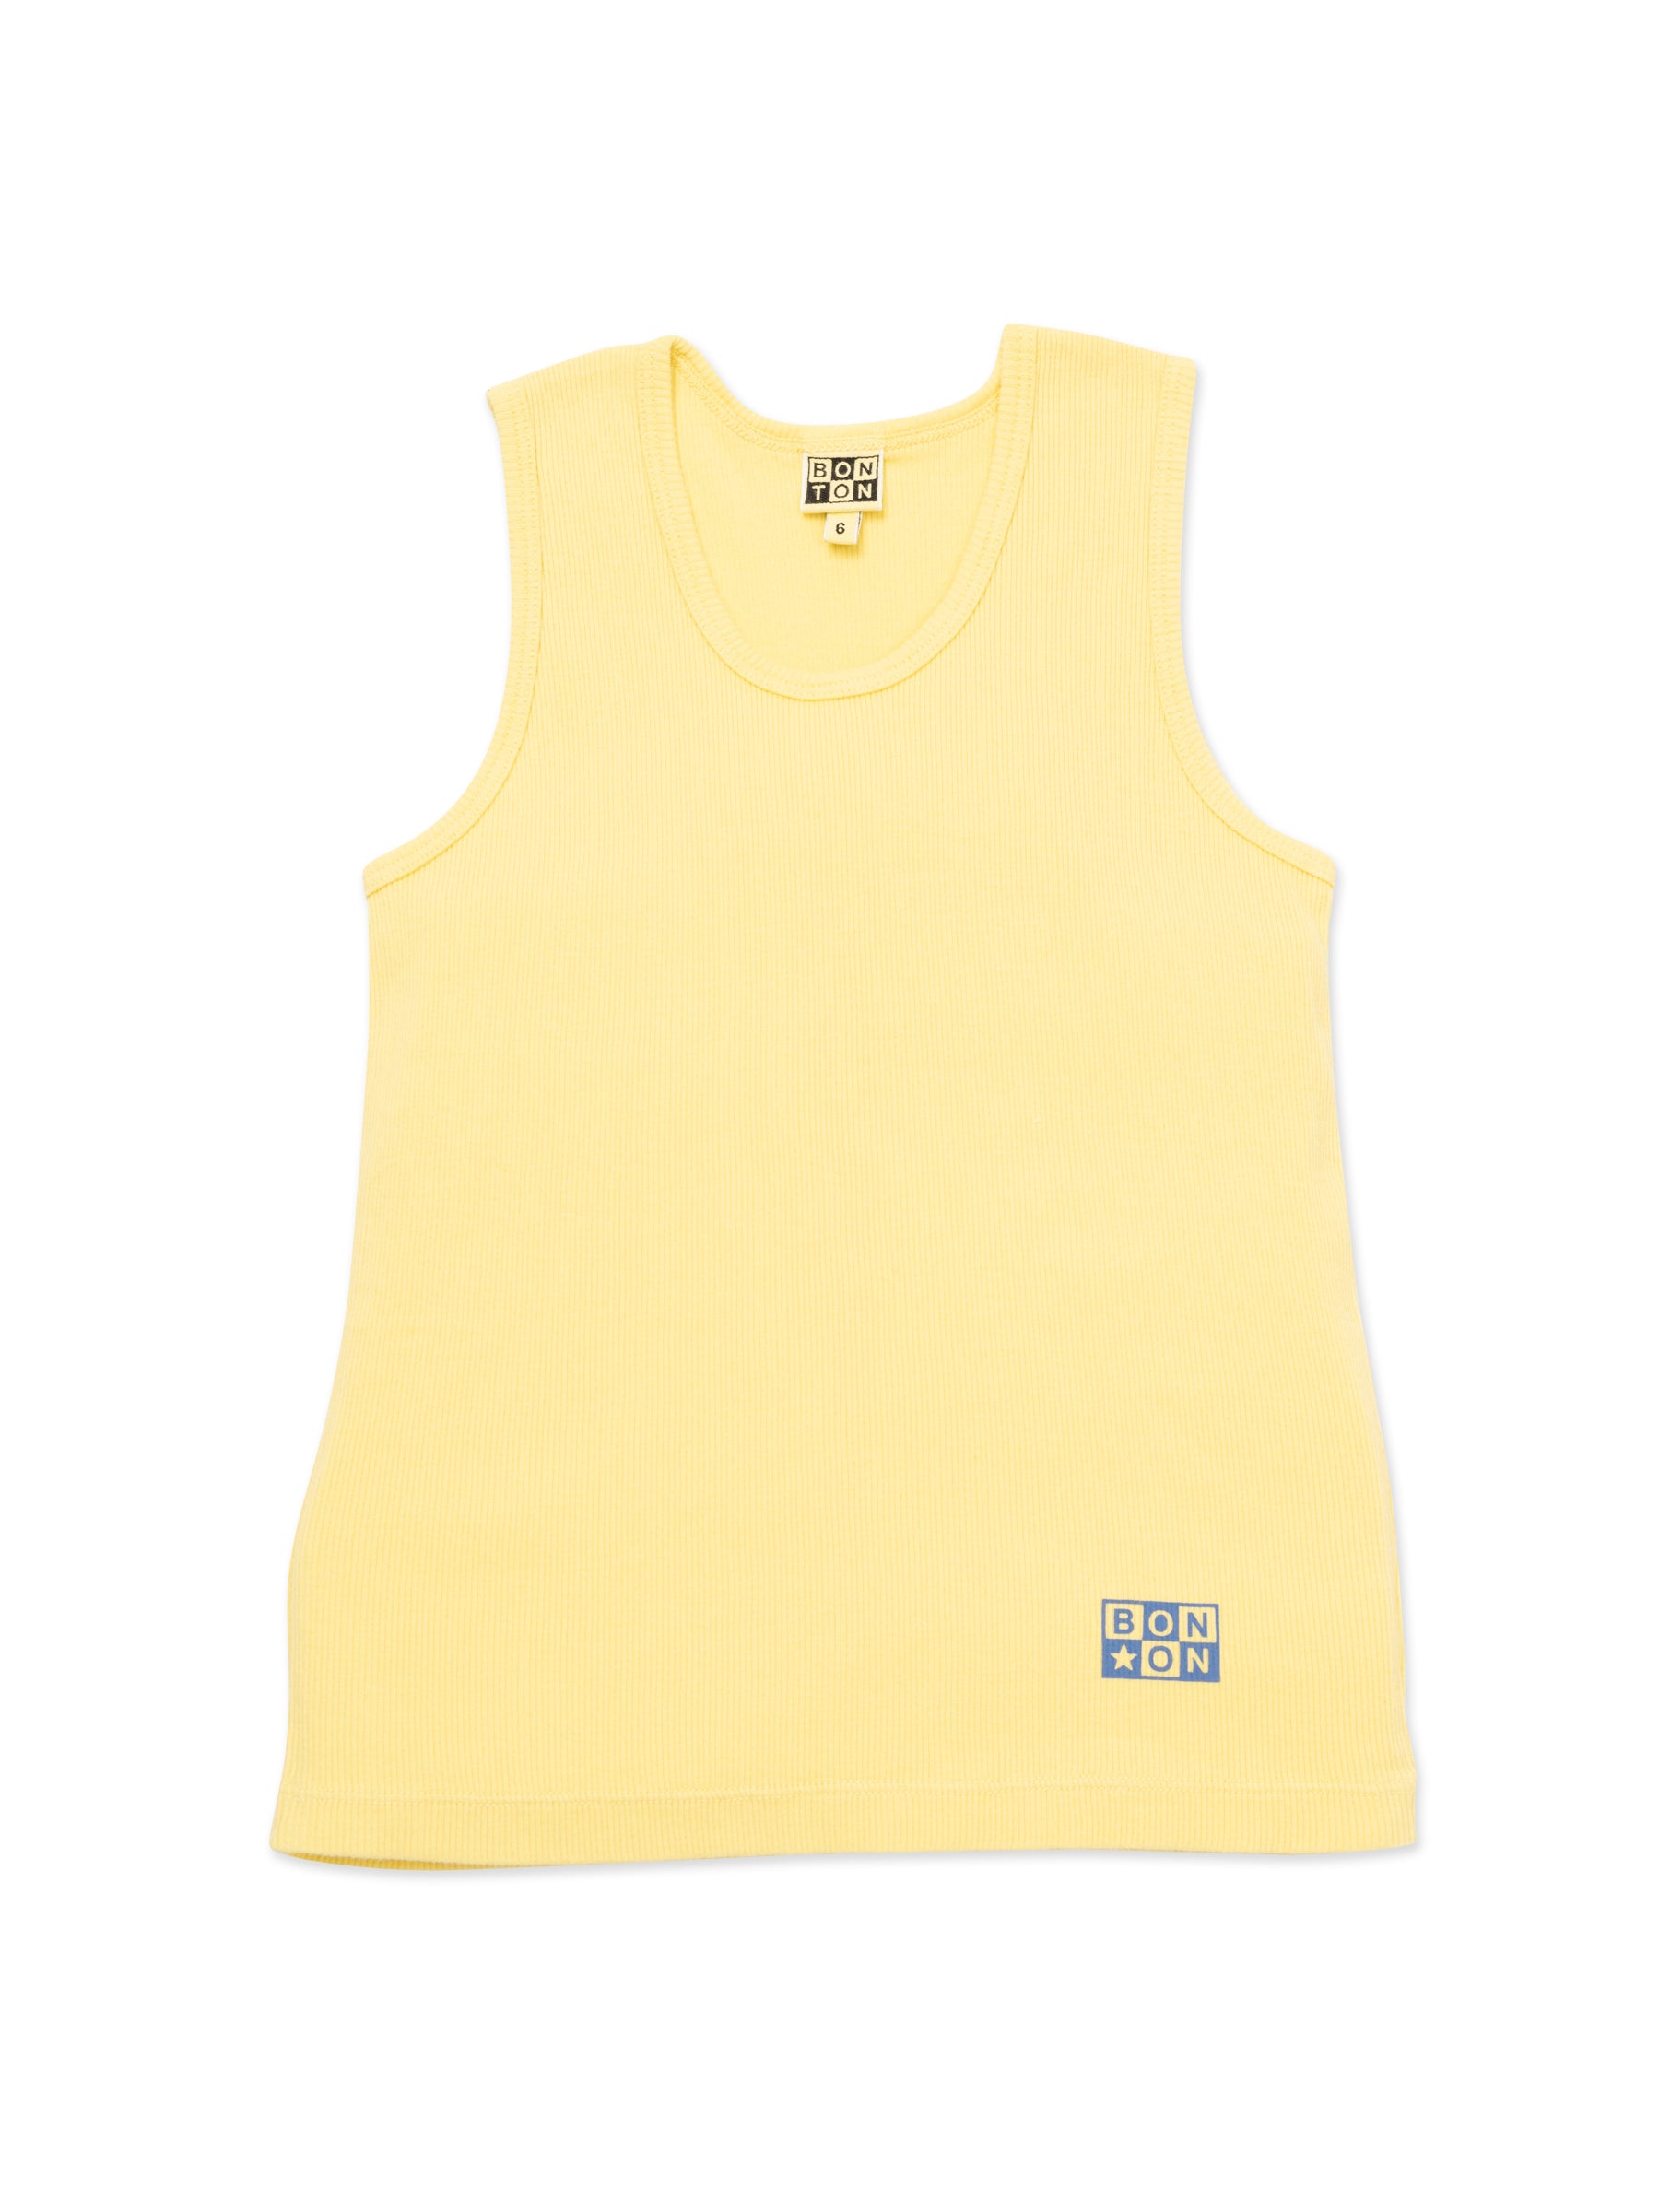 Boys Light Yellow Cotton Tank Top